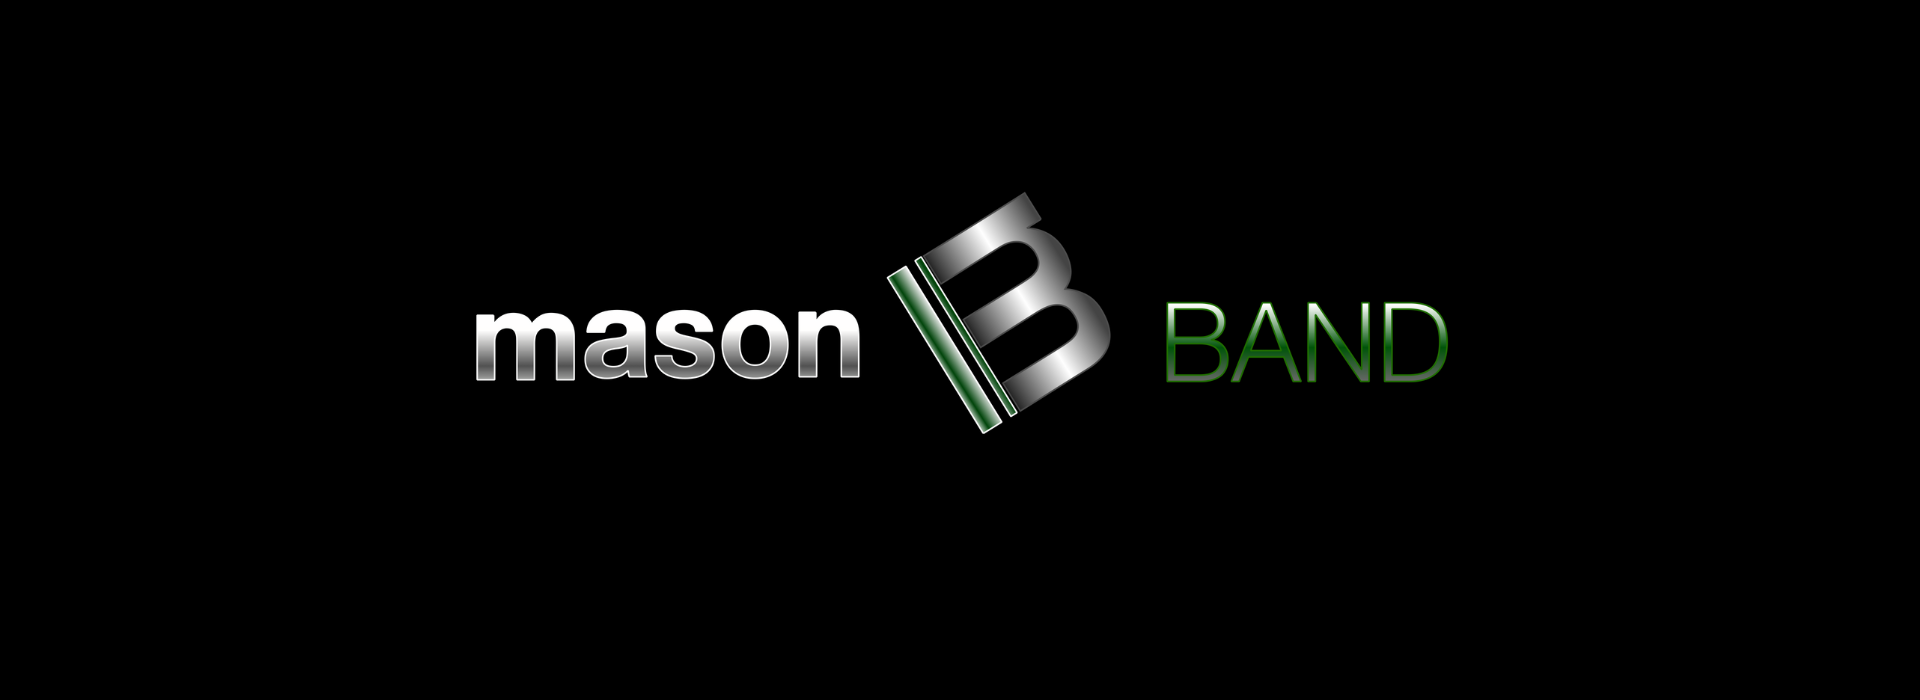 Mason Band Logo